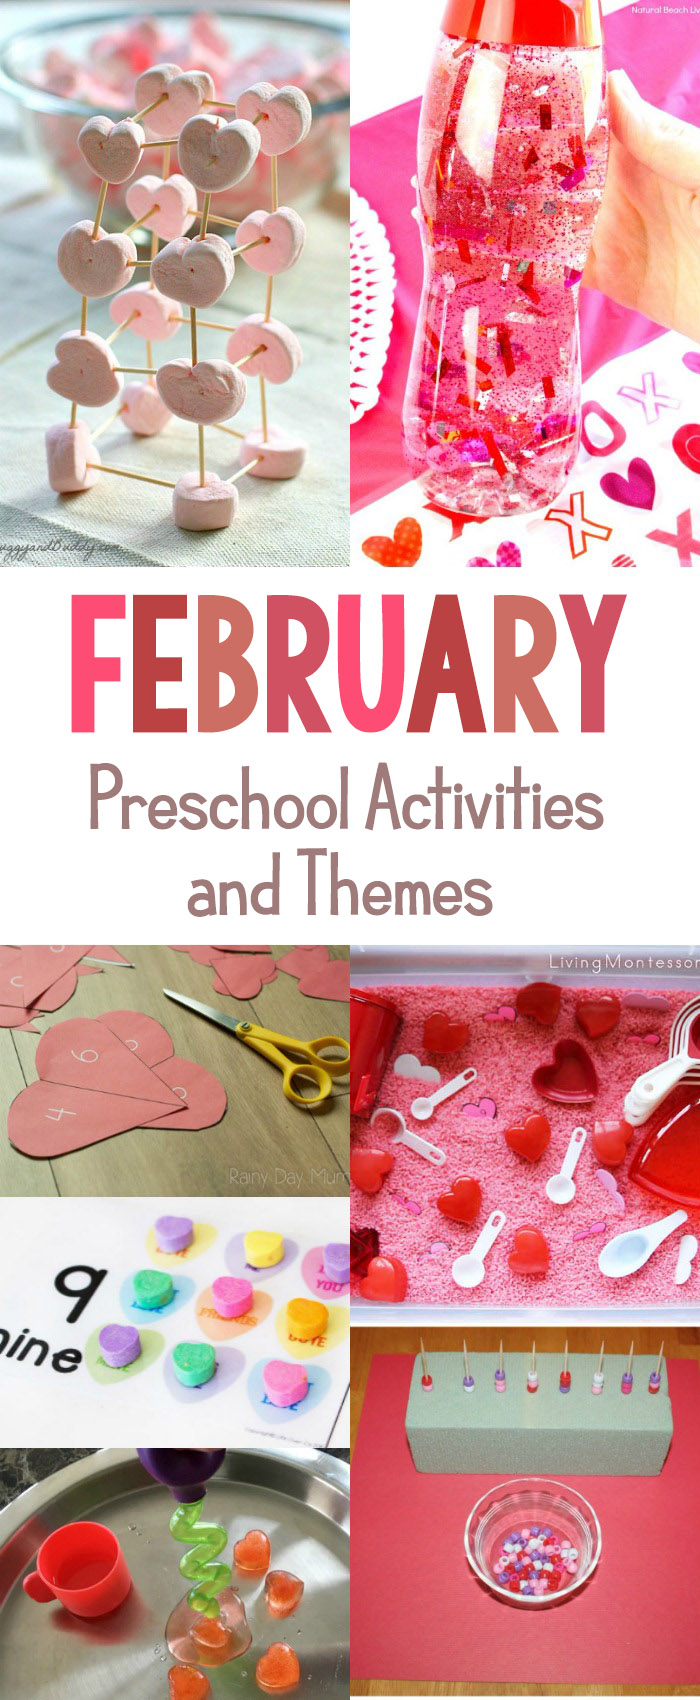 30+ February Preschool Activities and Themes for Preschool